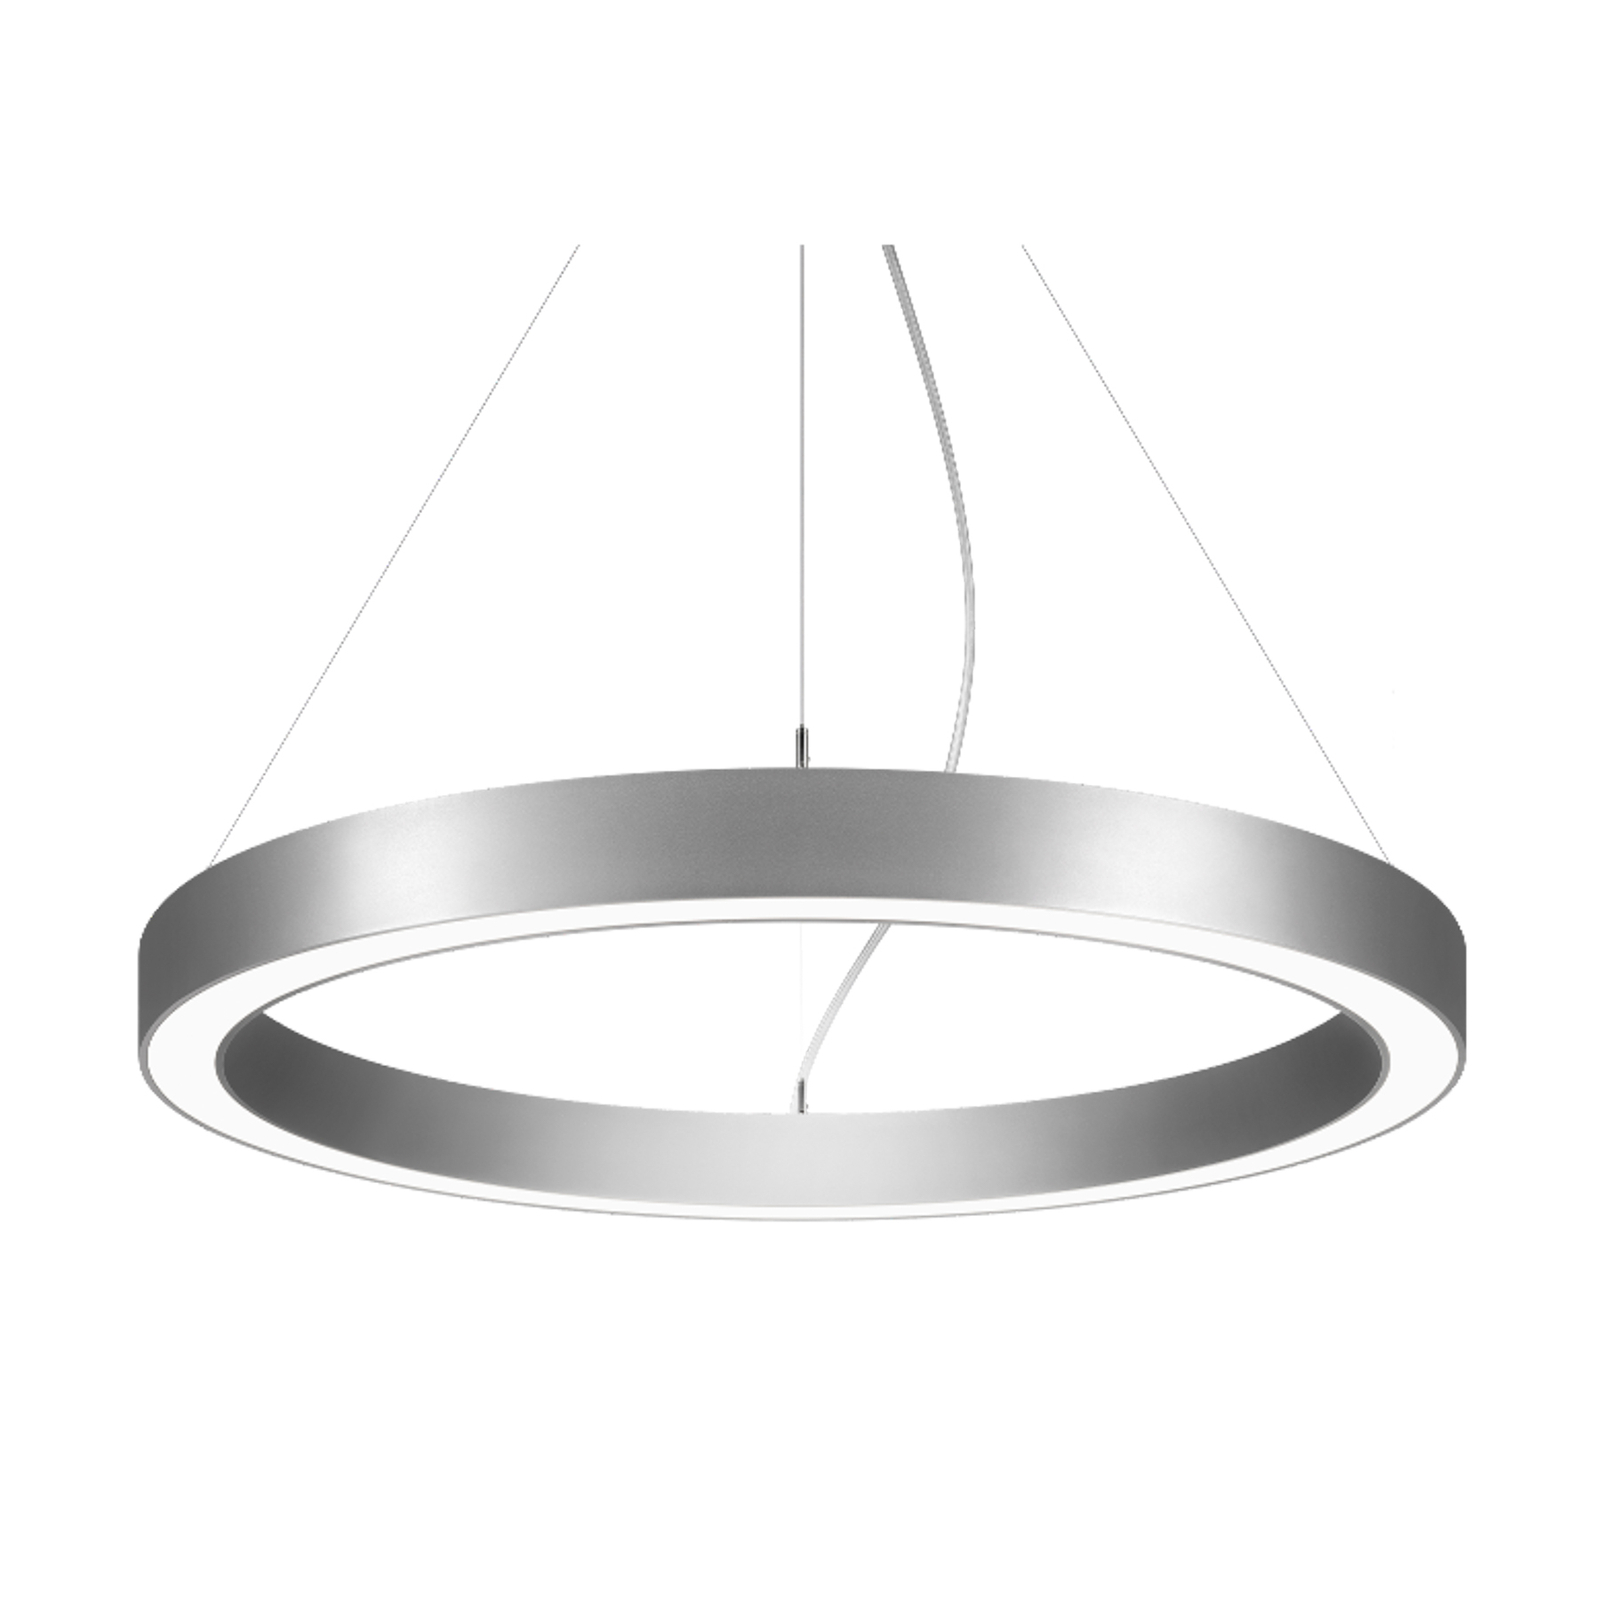 BRUMBERG Biro Circle Ring10 direto, Ø 45 cm, CA, CCT, prata